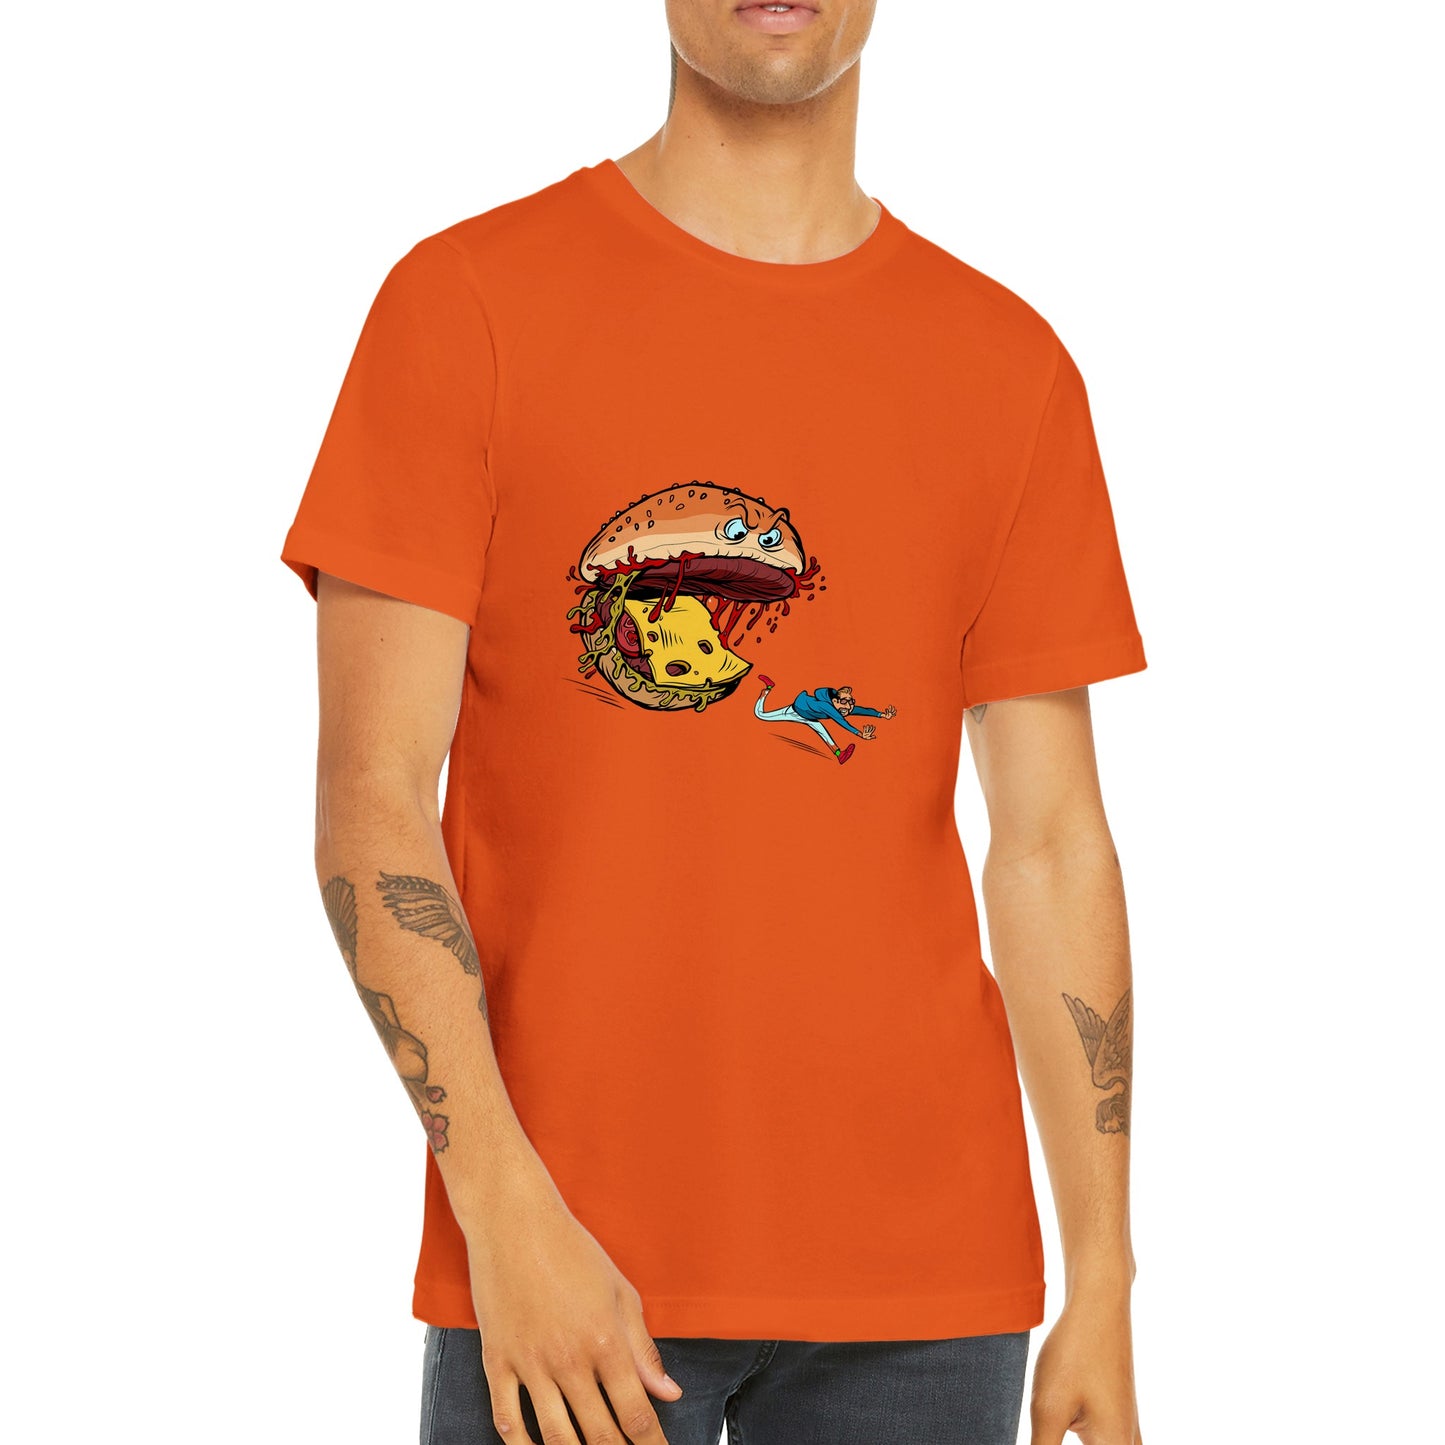 Monster Burger chasing man T-shirt